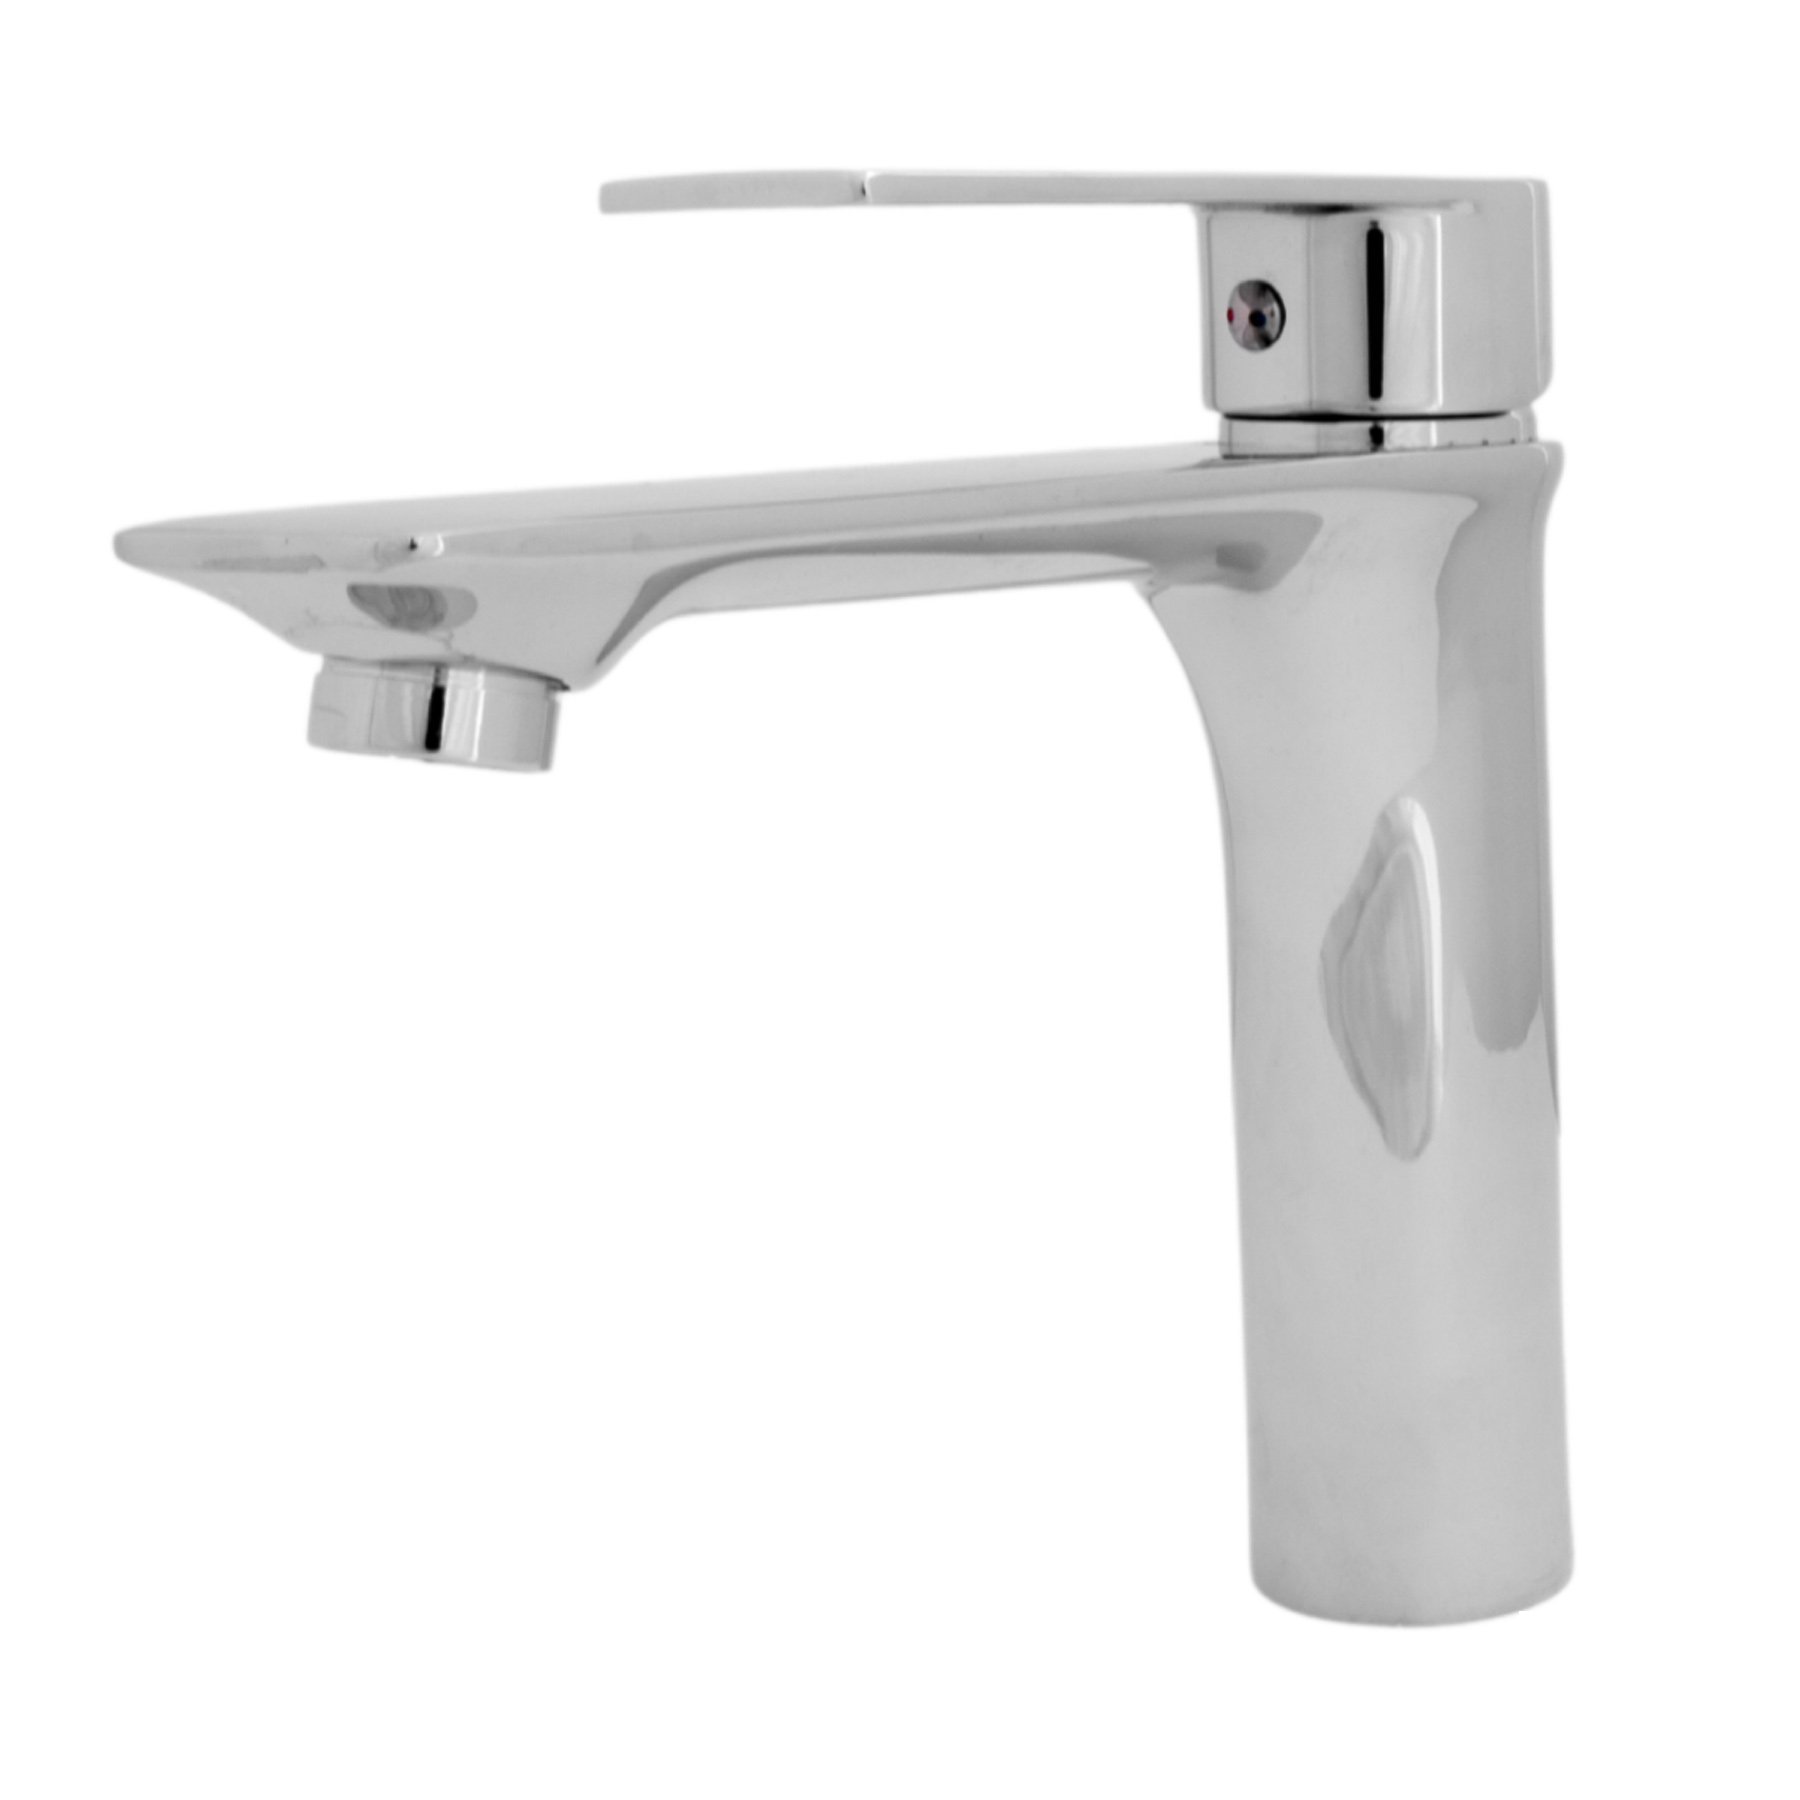 Misturador Monocomando de Mesa Bica Baixa para Banheiro Basique - Cromado Konnen Metais Sanitários p - 1